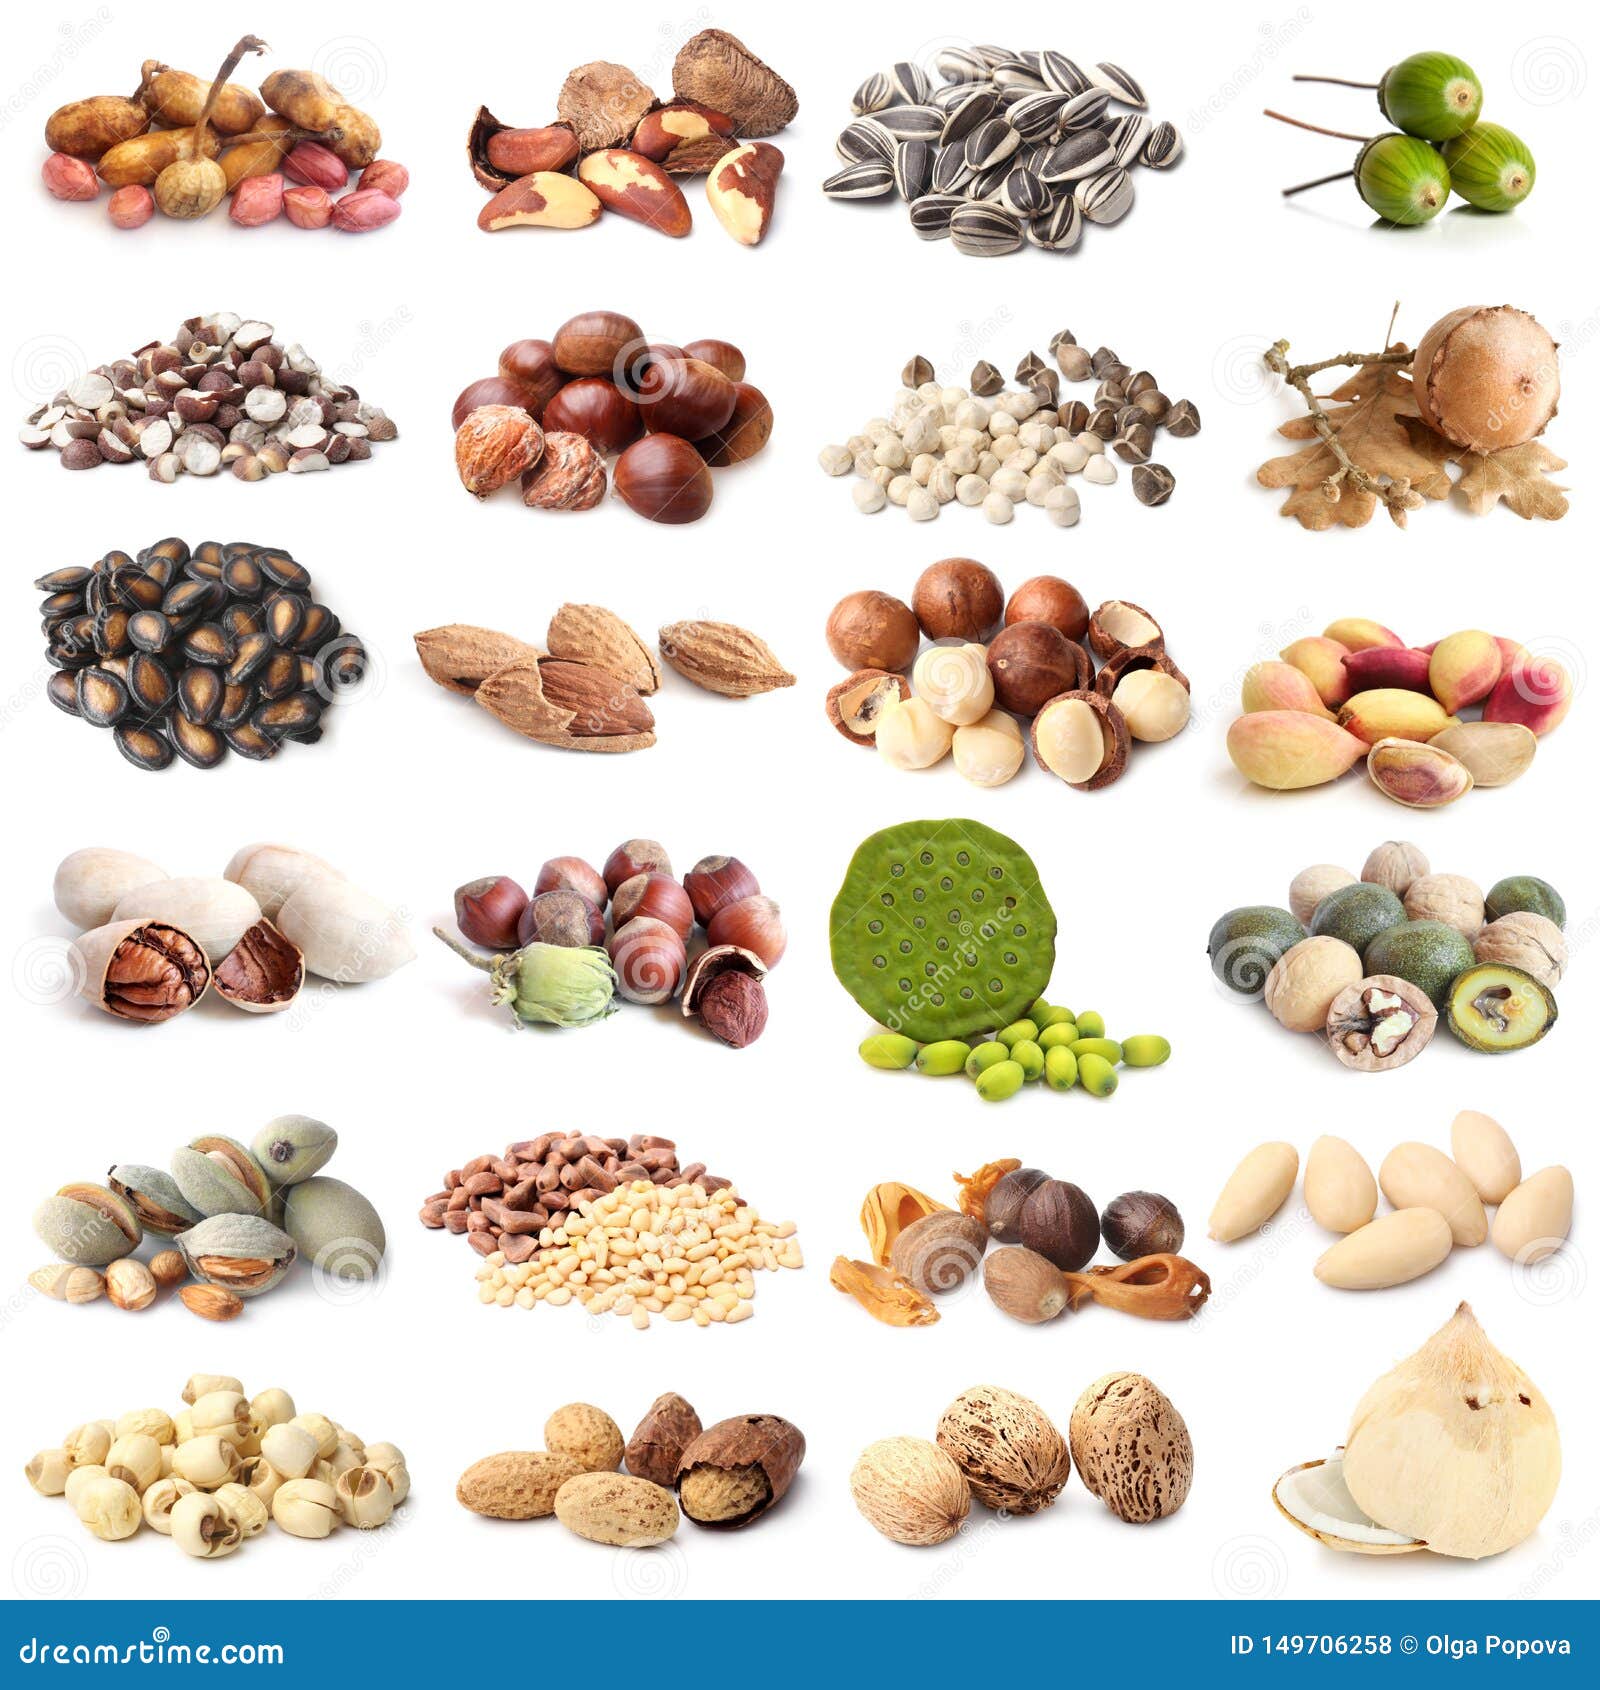 Polya nuts инстаграм. Коллекция орехов. Nuts and Seeds collection. Nuts White background. Alee_nut Instagram.